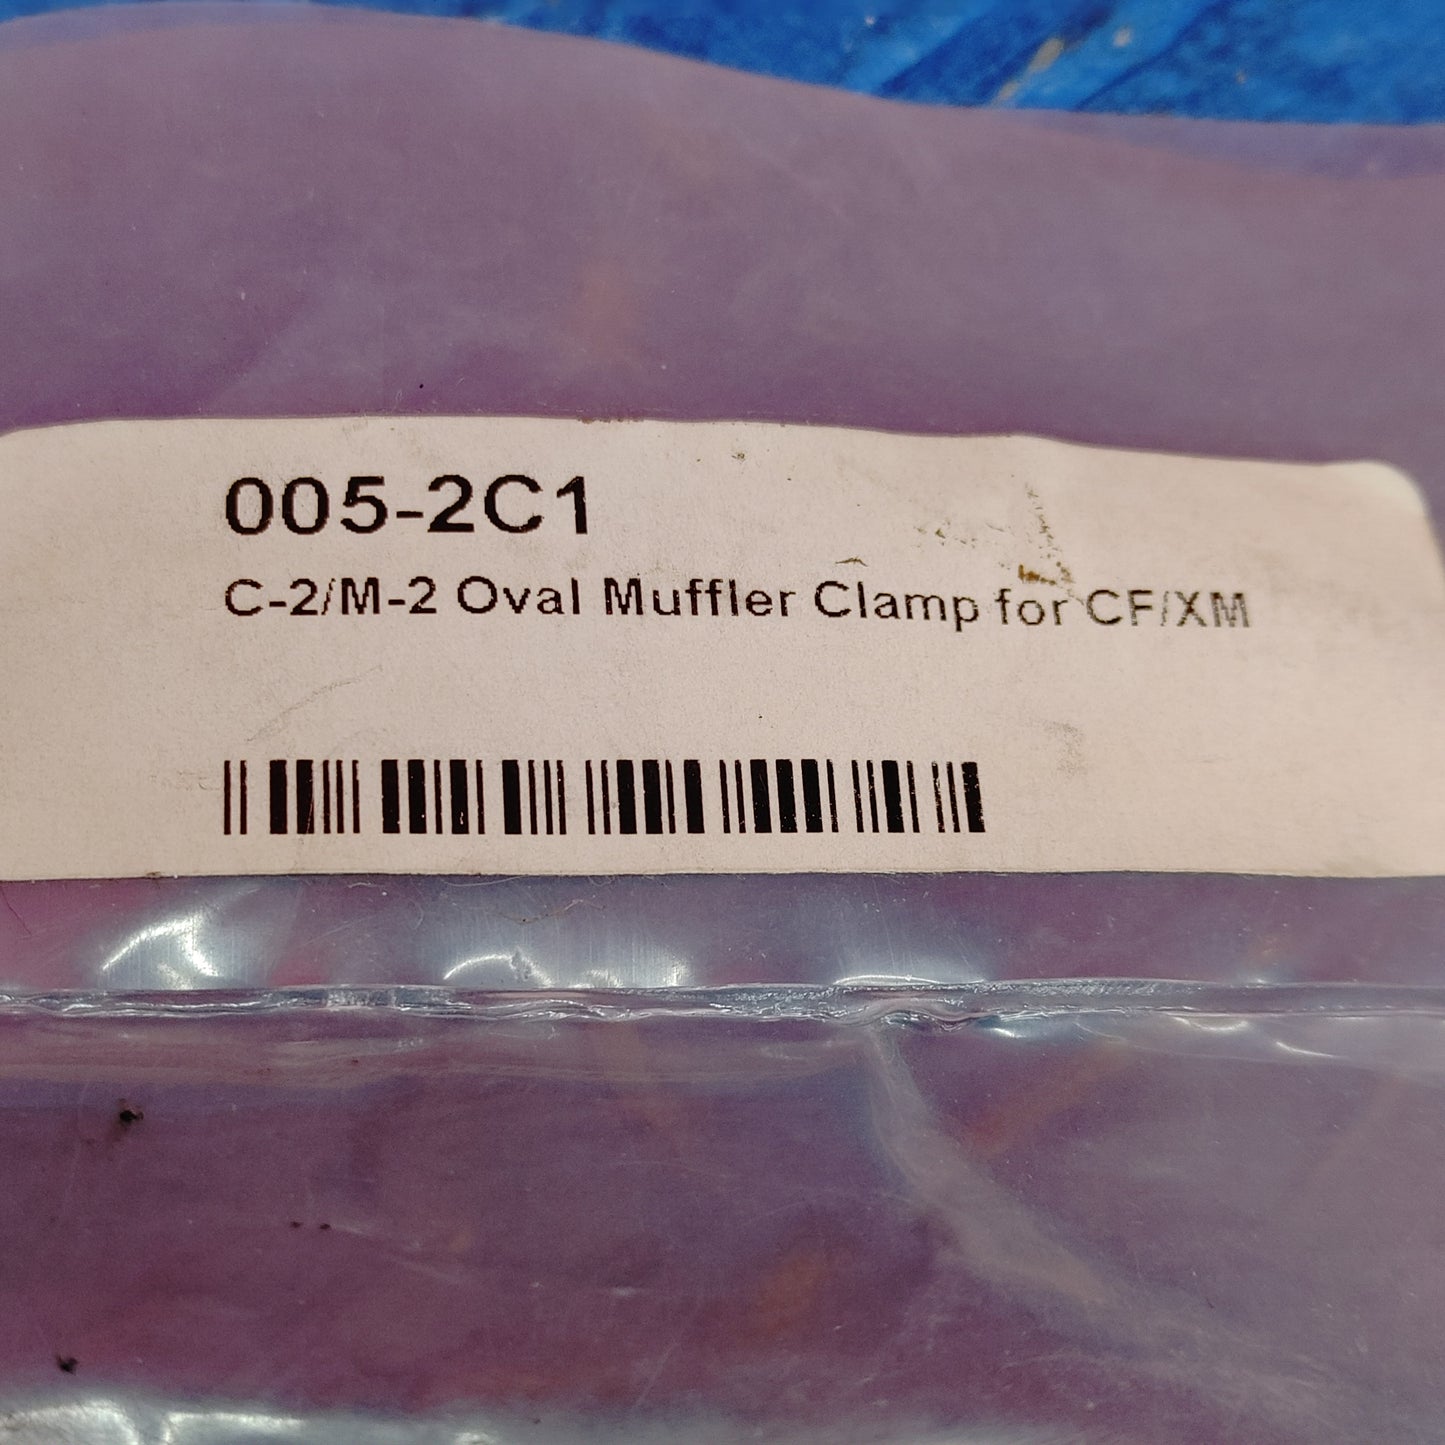 C-2/M-2 Oval Muffler Clamp for CF/XM 005-2C1     S9B20/23